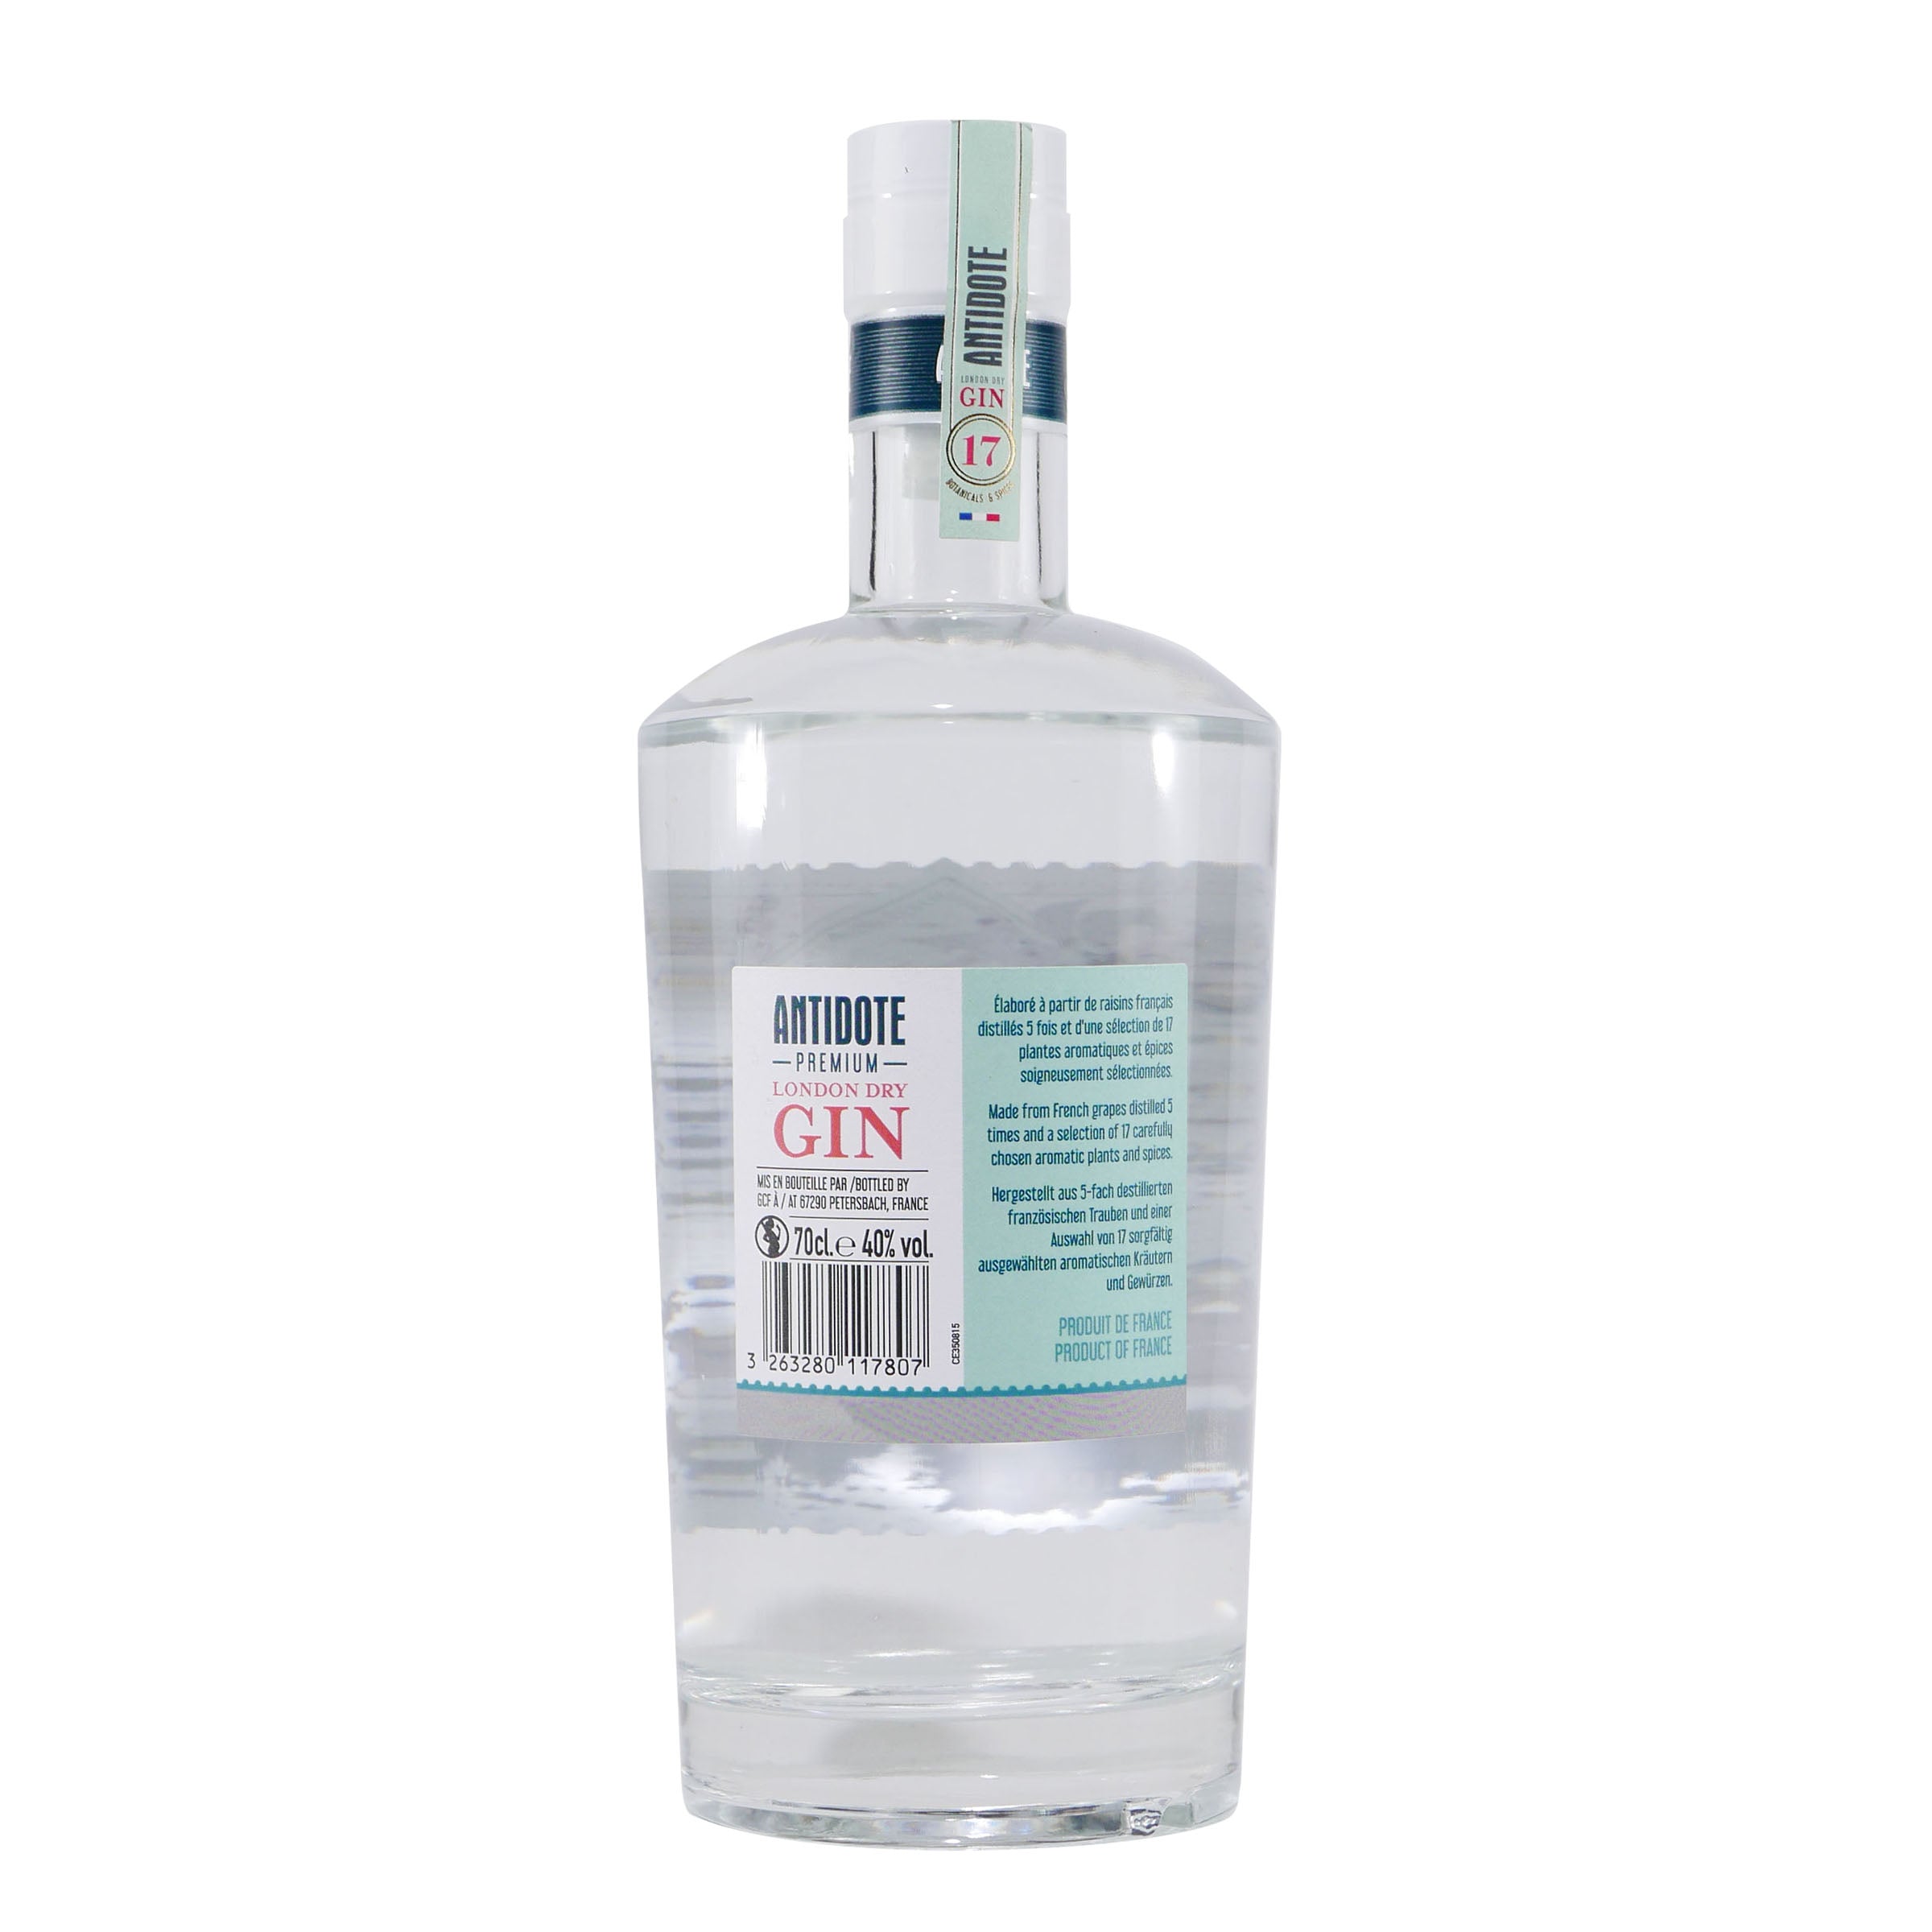 Antidote Premium London Dry Gin (6 x 0,7L)